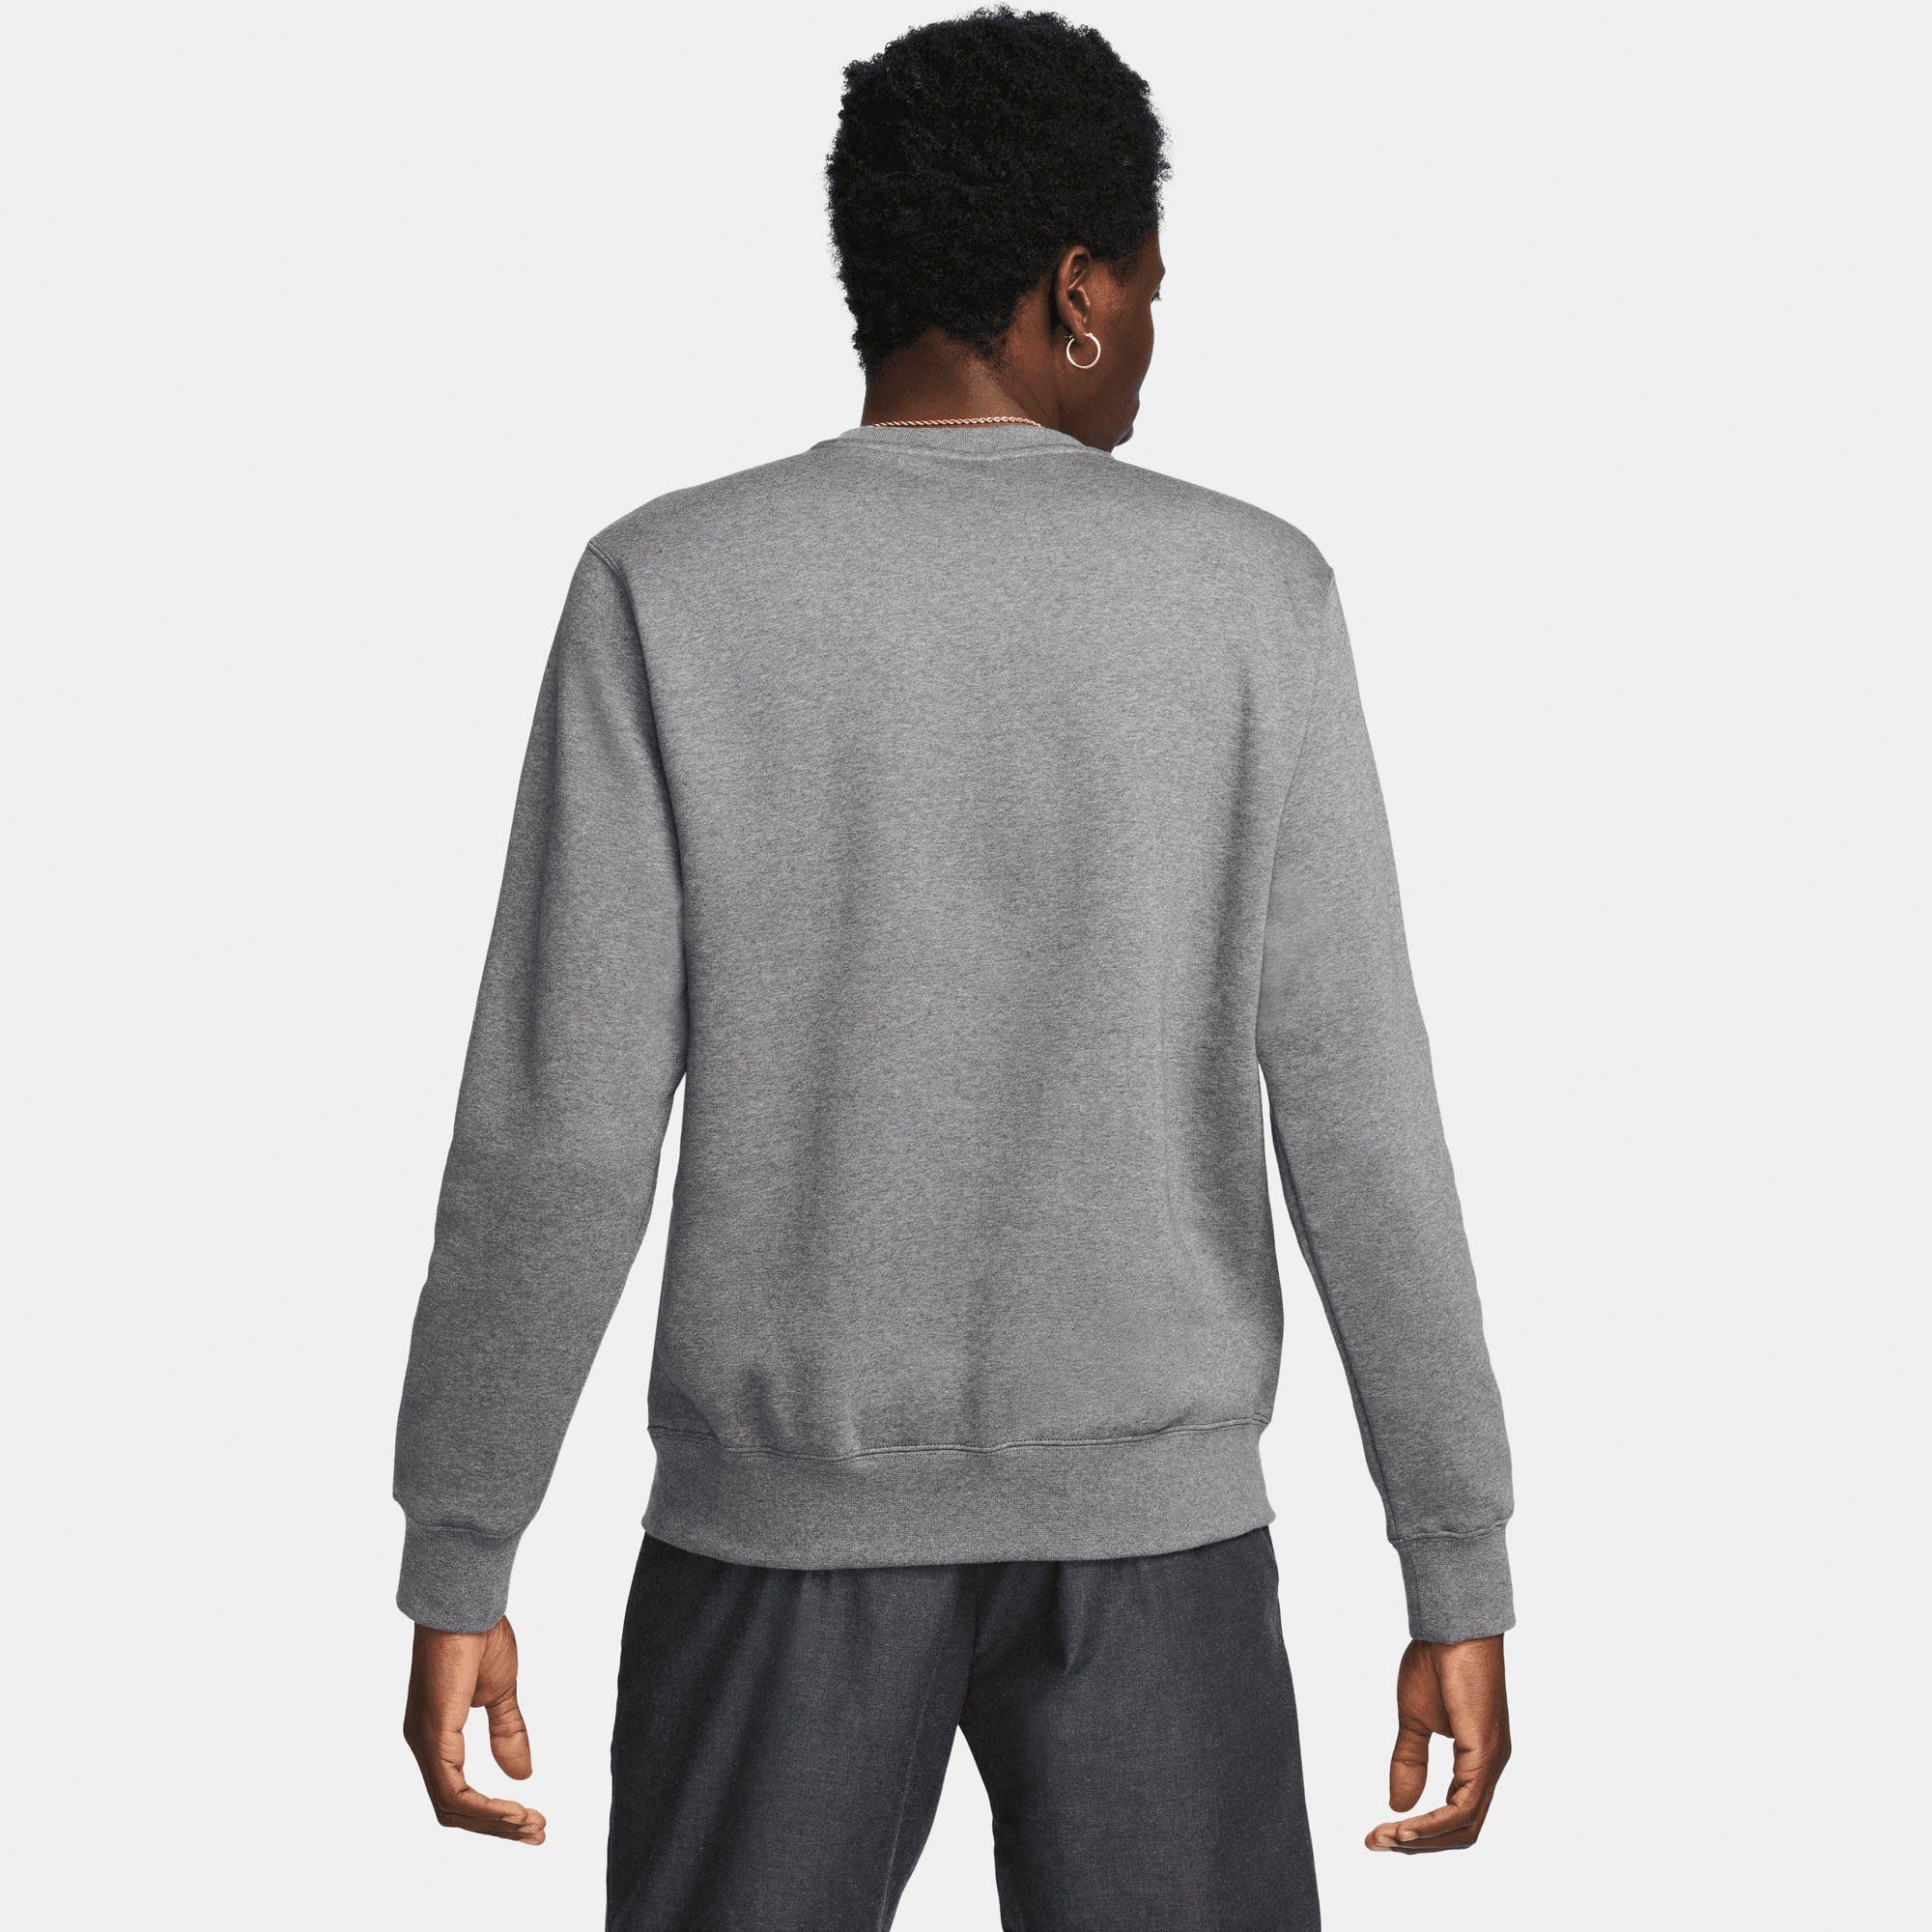 Sportswear Nike HEATHR Crew Club Men's Graphic Fleece Sweatshirt CHARCOAL